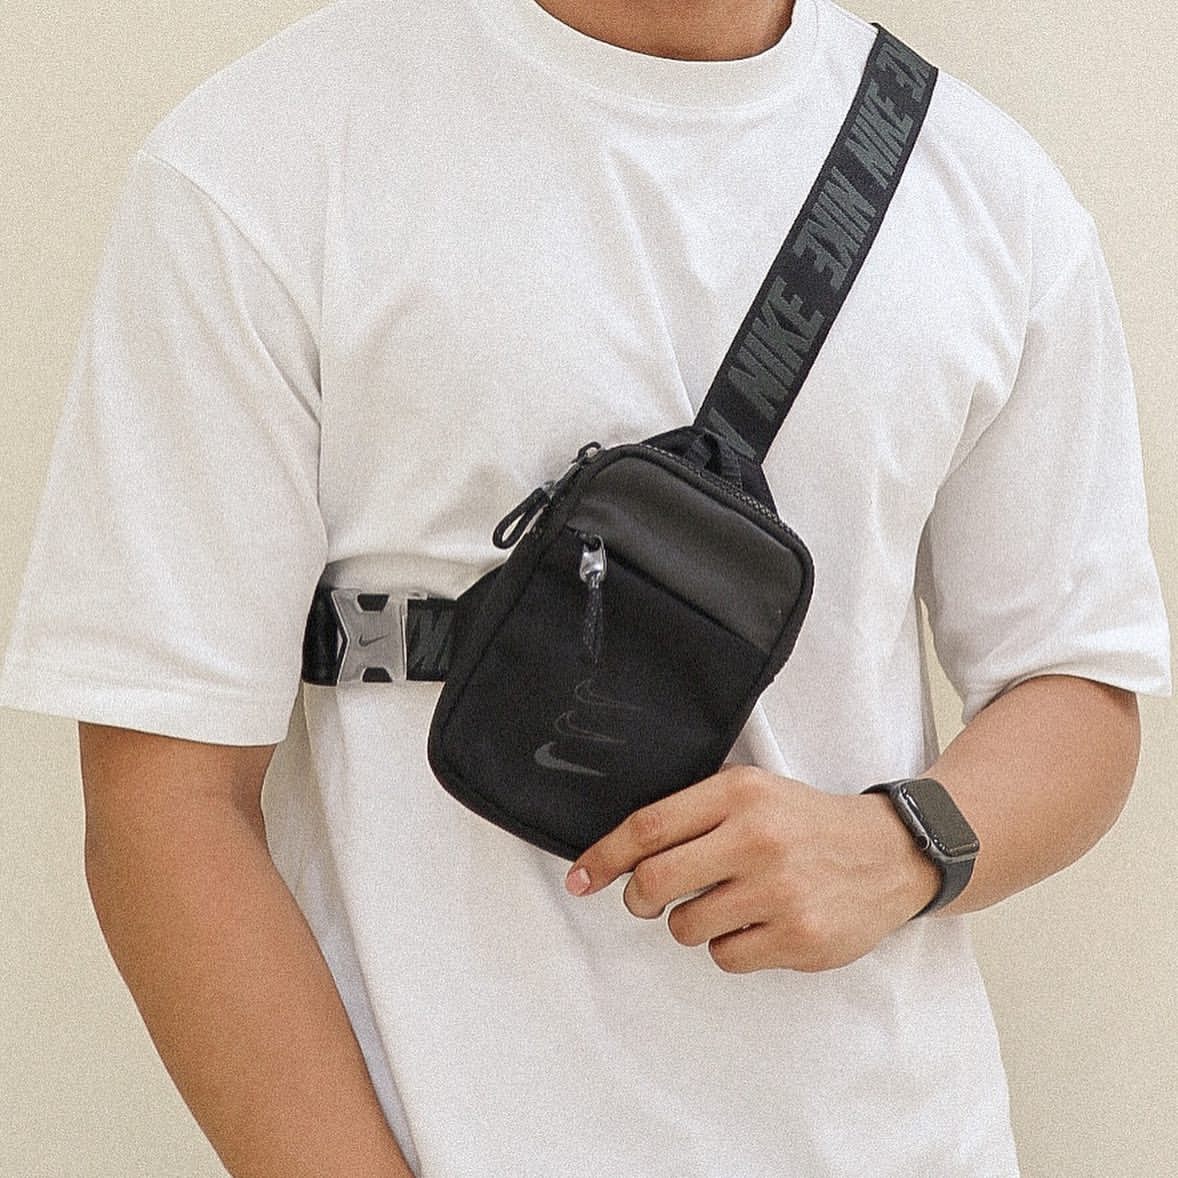 Nike Advance Crossbody Bag In Triple Black for Men